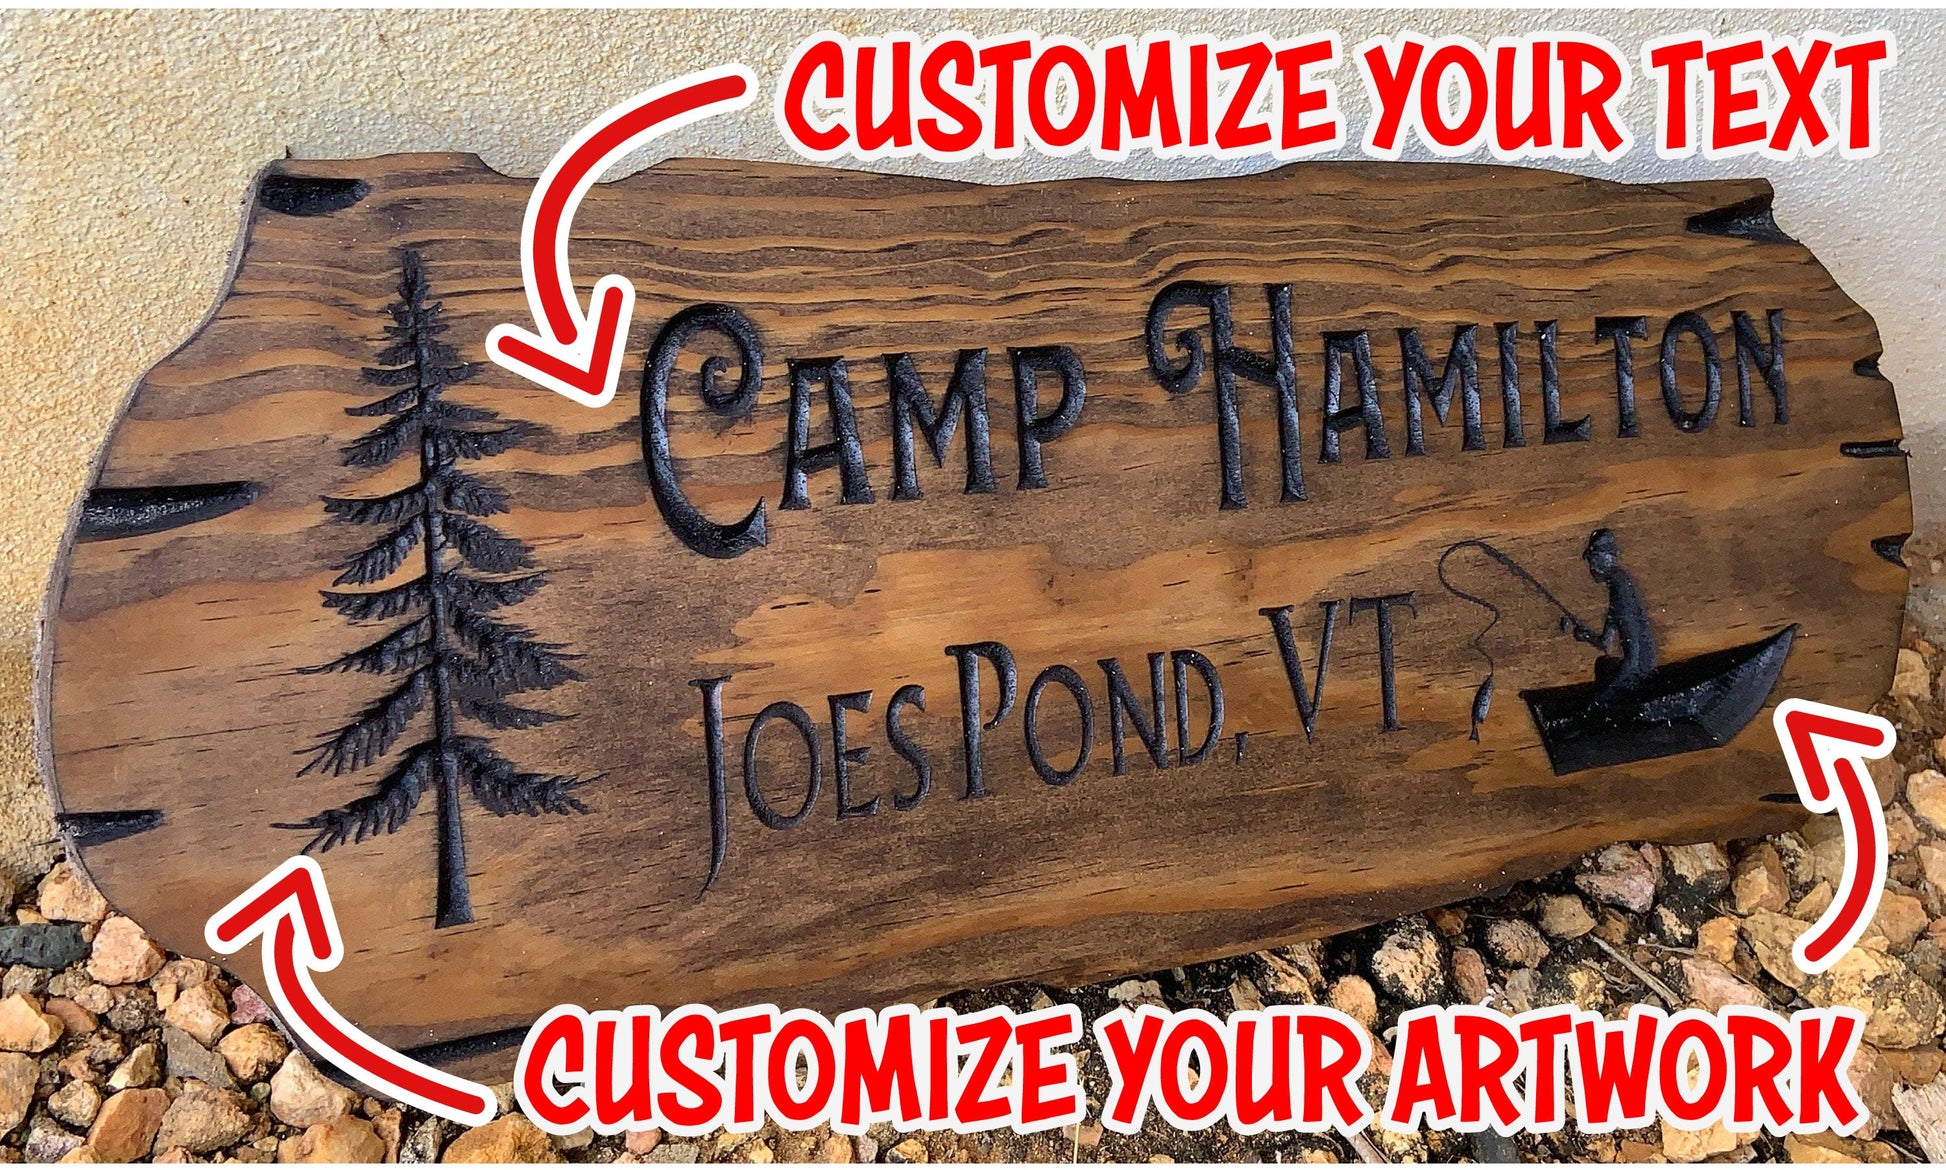 Camp Hamilton Joes Pond, VT Wood Sign